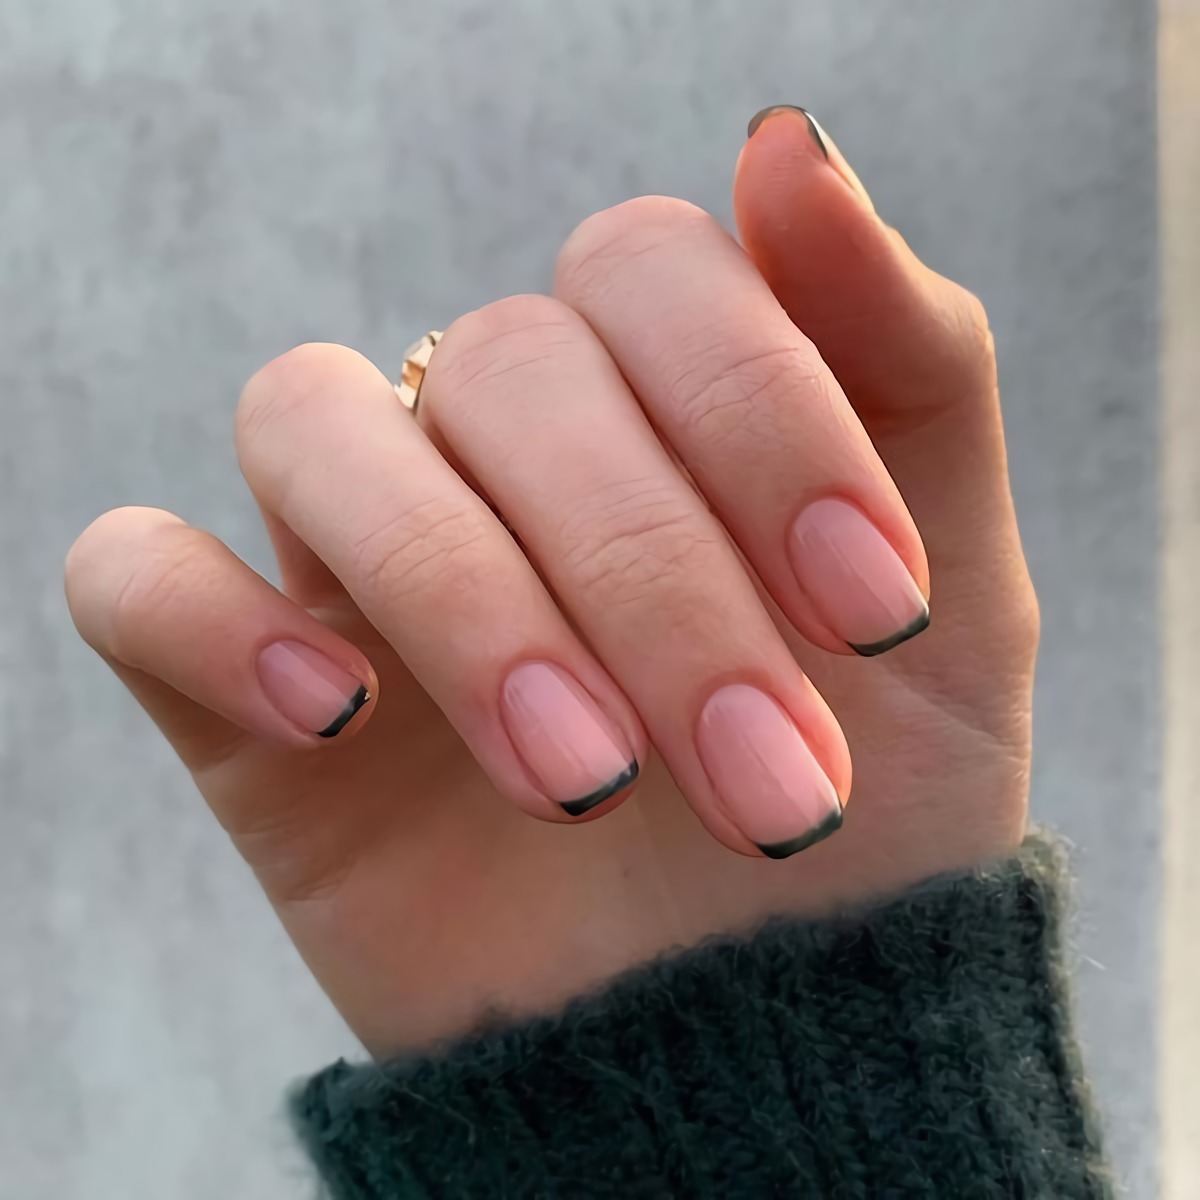 base gel colore rosa nude manicure francese smalto verde micro french manicure